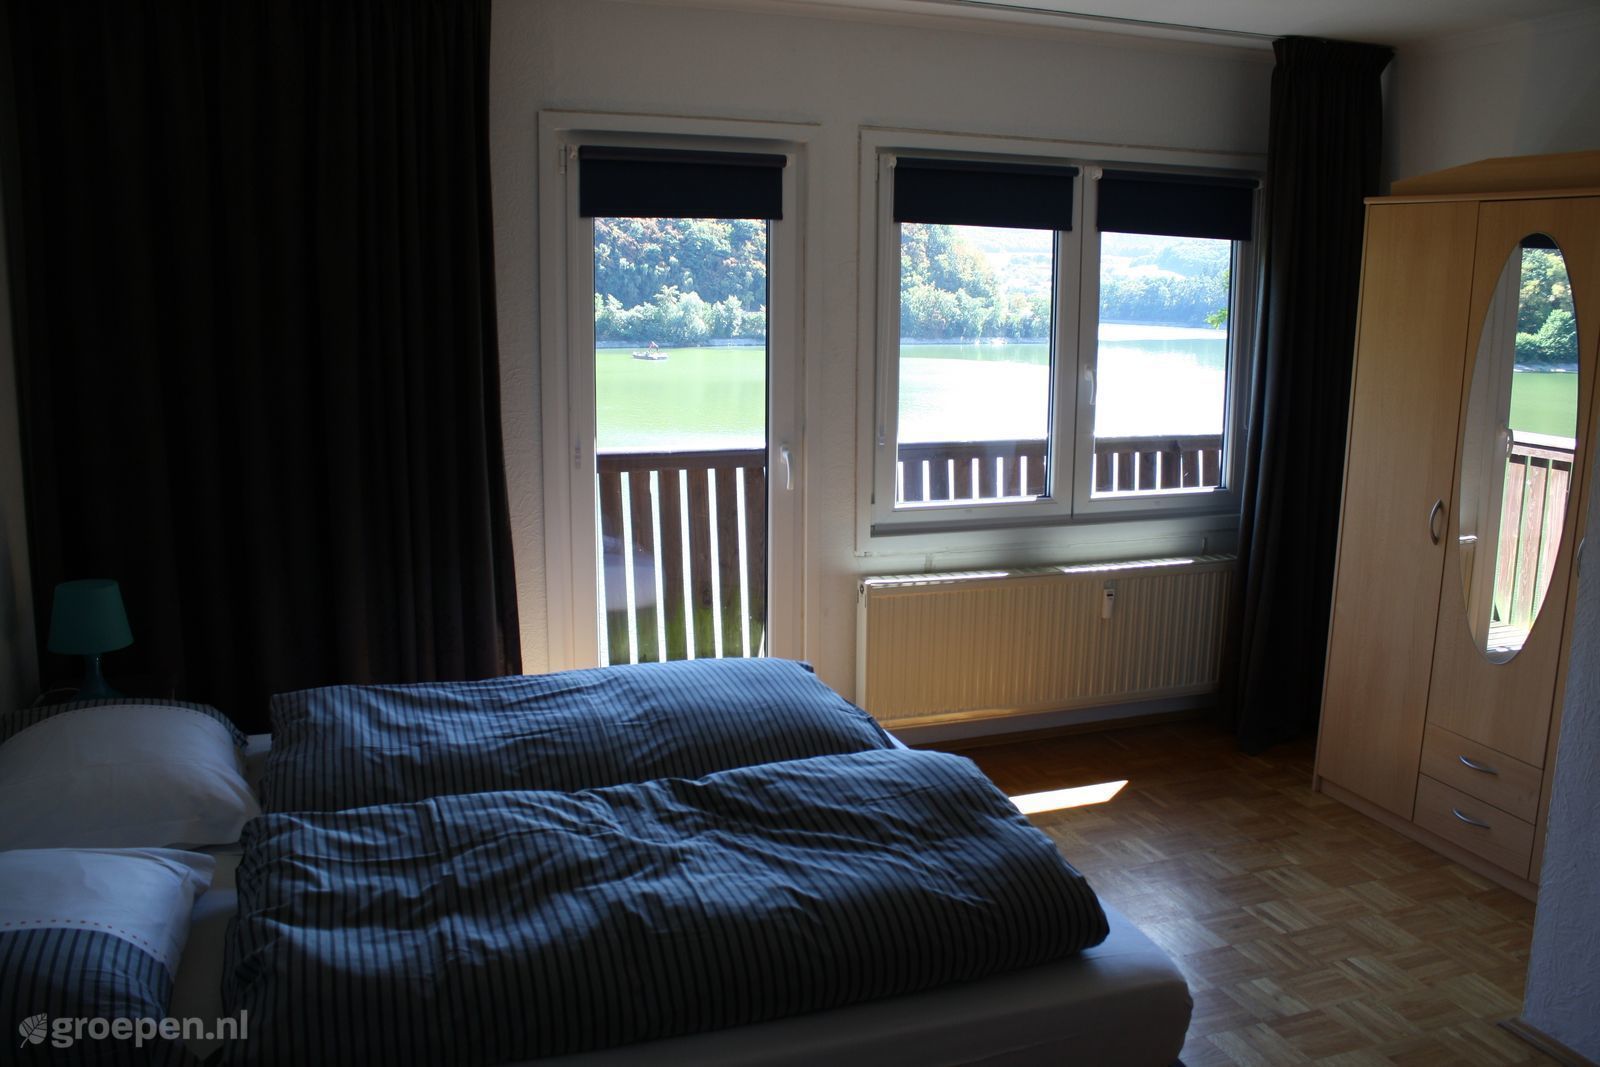 Group accommodation Marsberg am Diemelsee